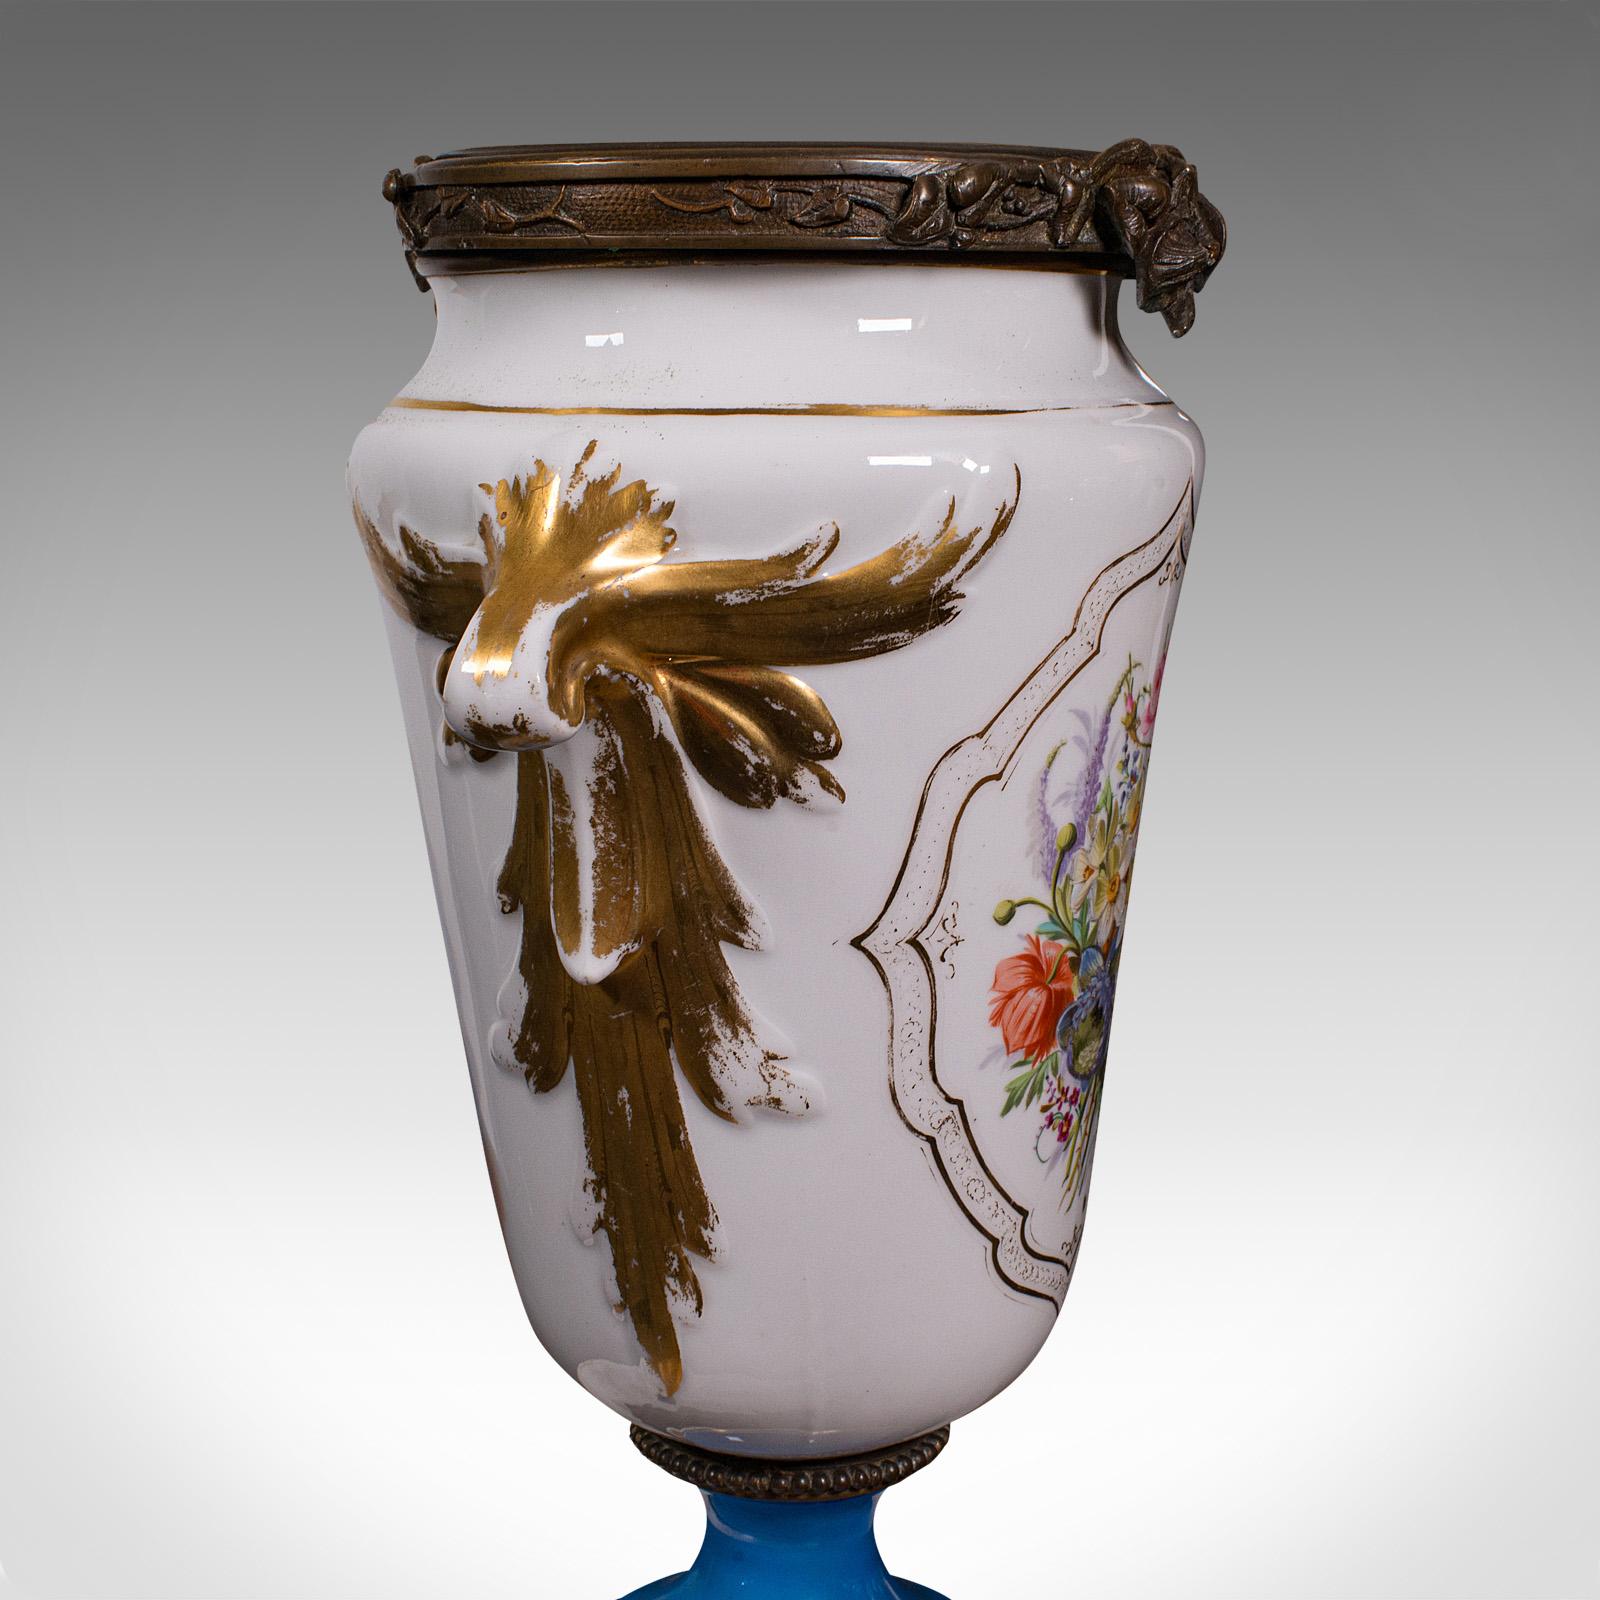 Antique Decorative Jardiniere, French, Ceramic, Display Planter, Vase, Victorian For Sale 6